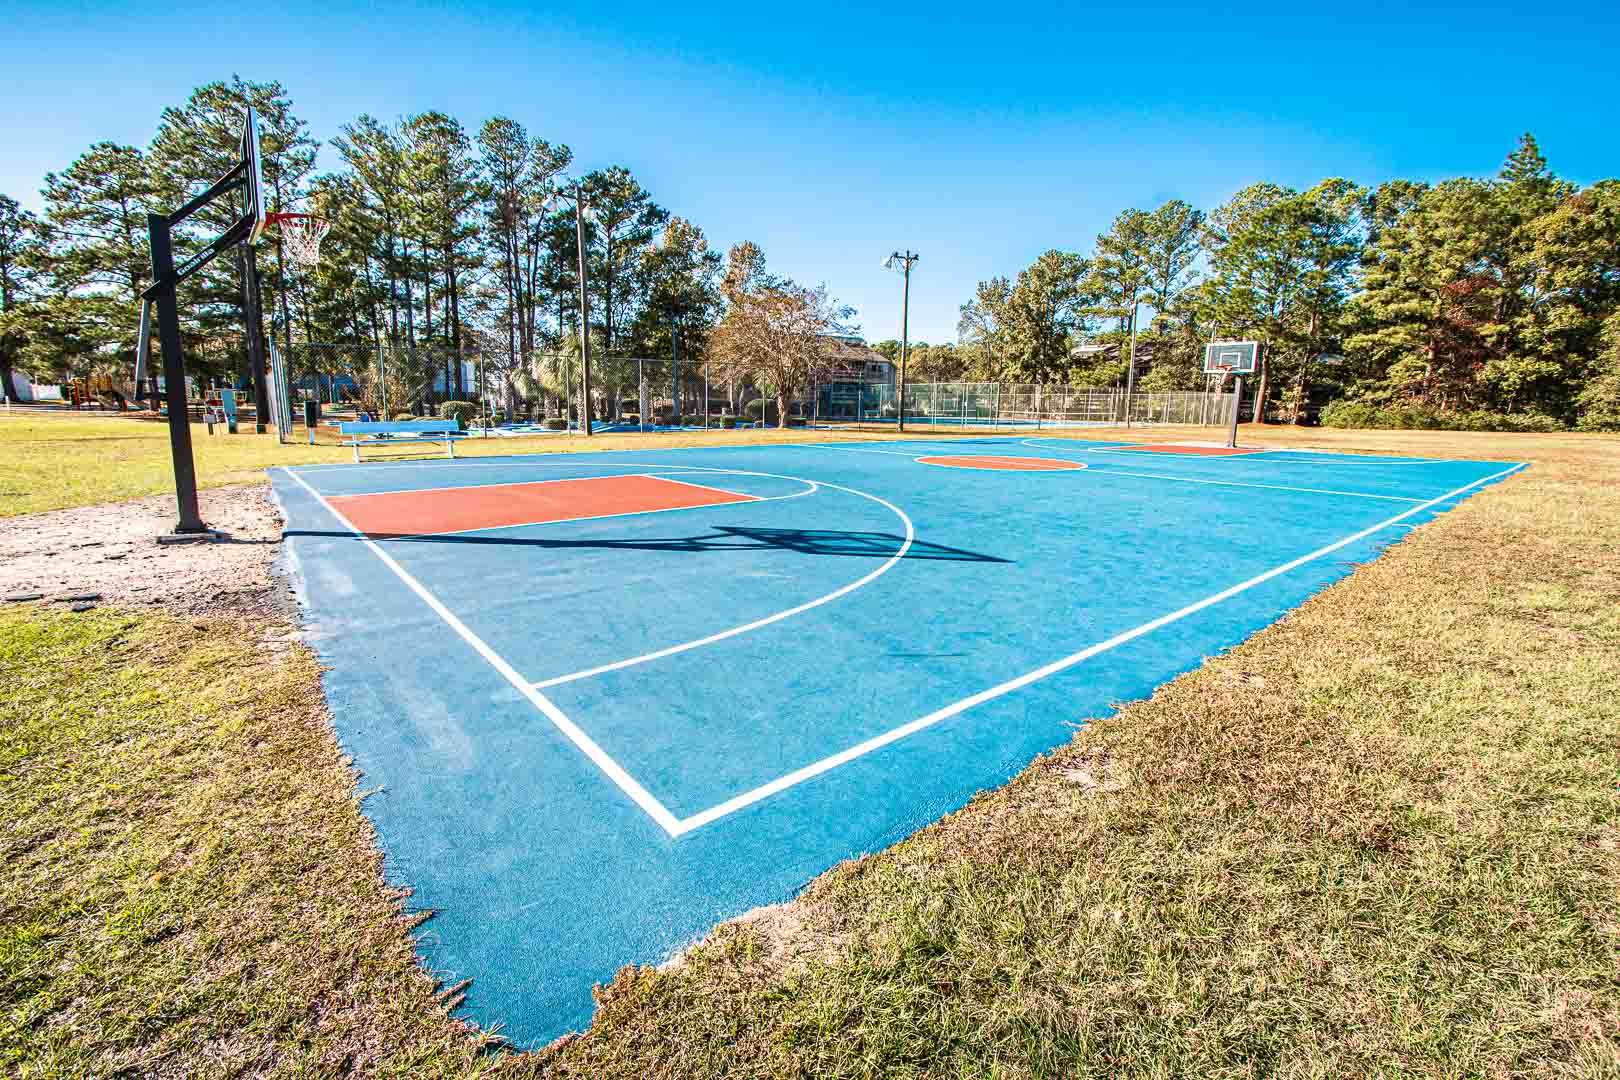 full size outdoor basketball court  at VRI's Sandcastle Village in New Bern, North Carolina.